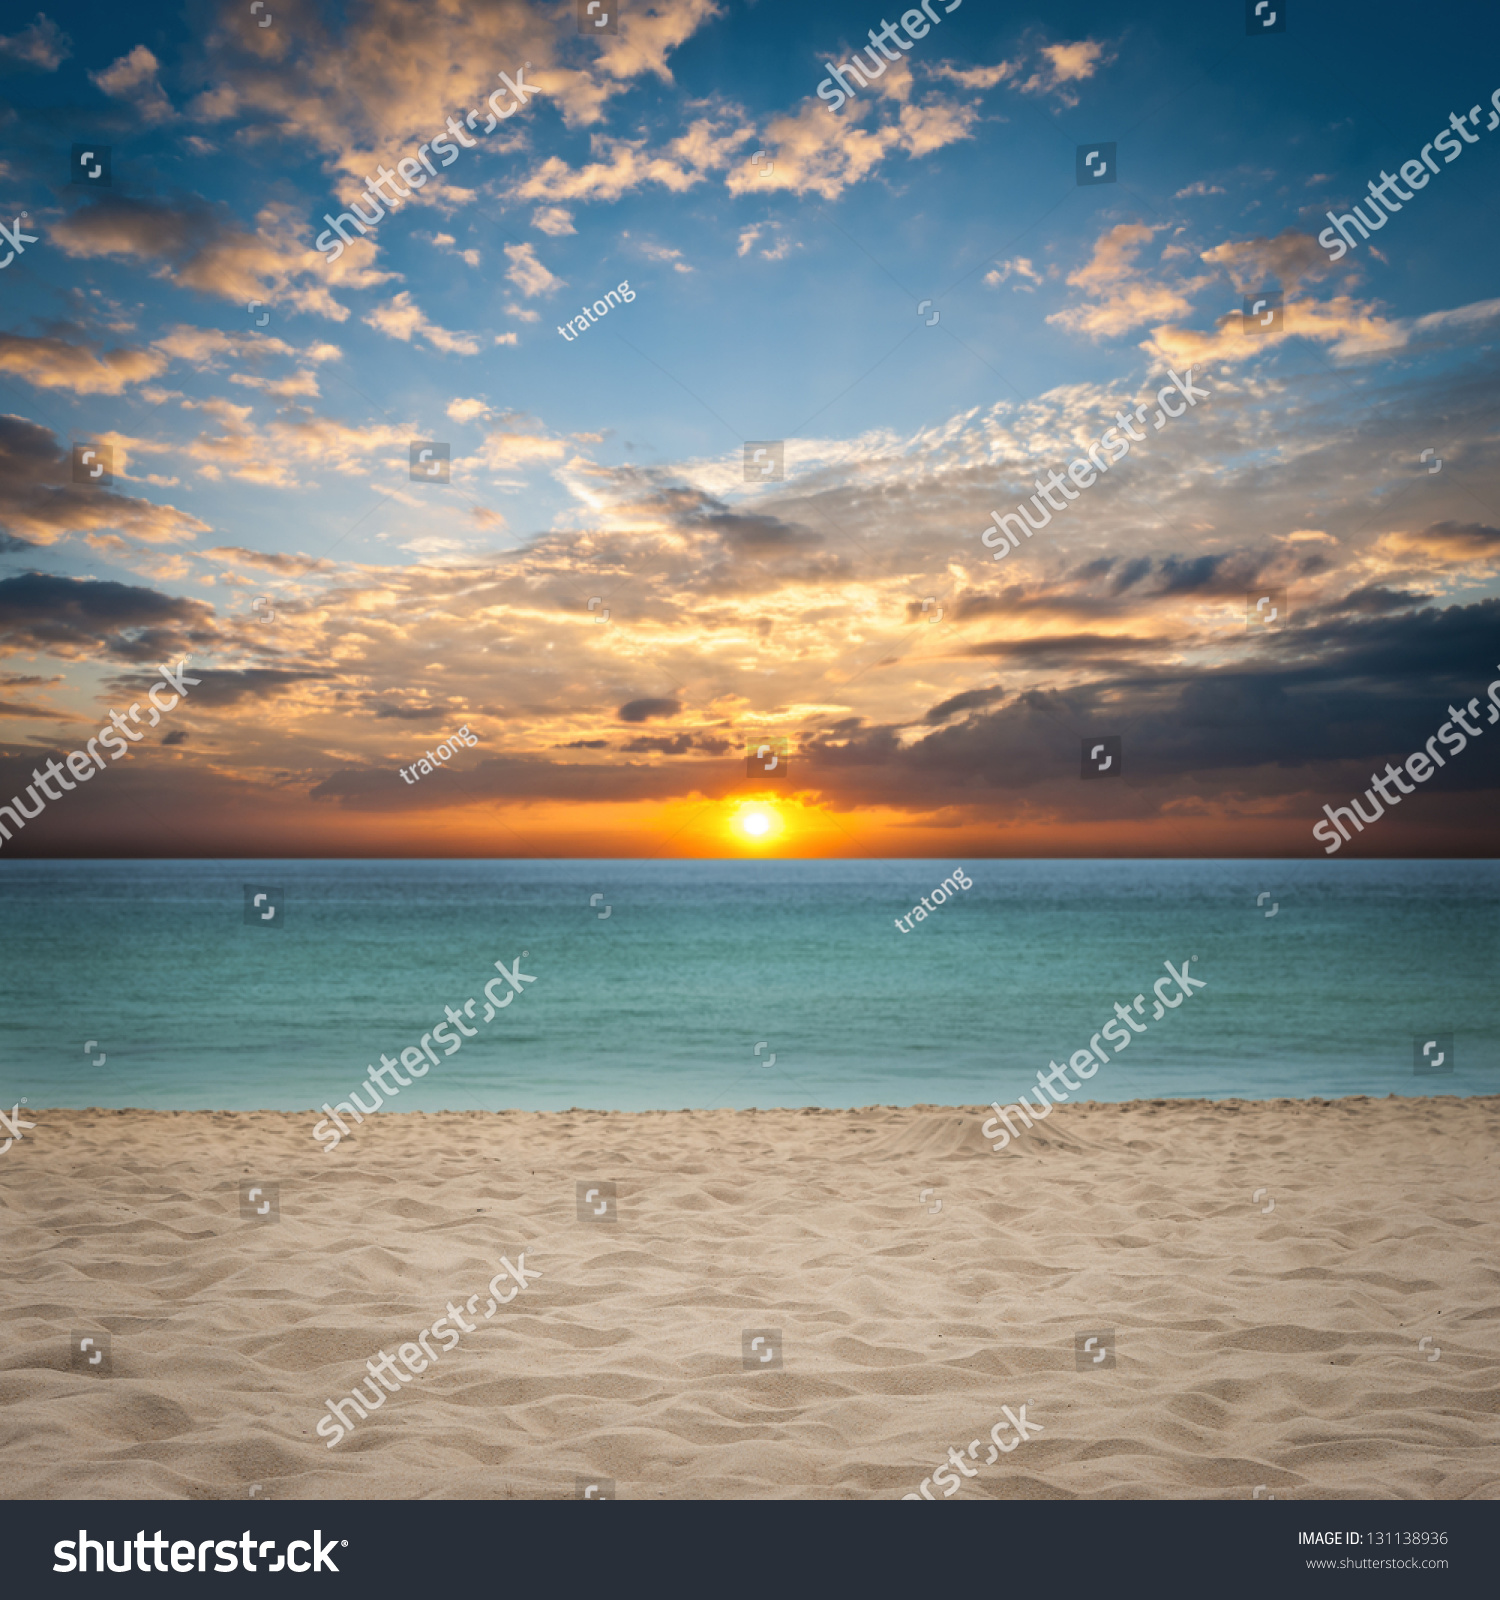 Sand Beach Sunset Stock Photo 131138936 - Shutterstock